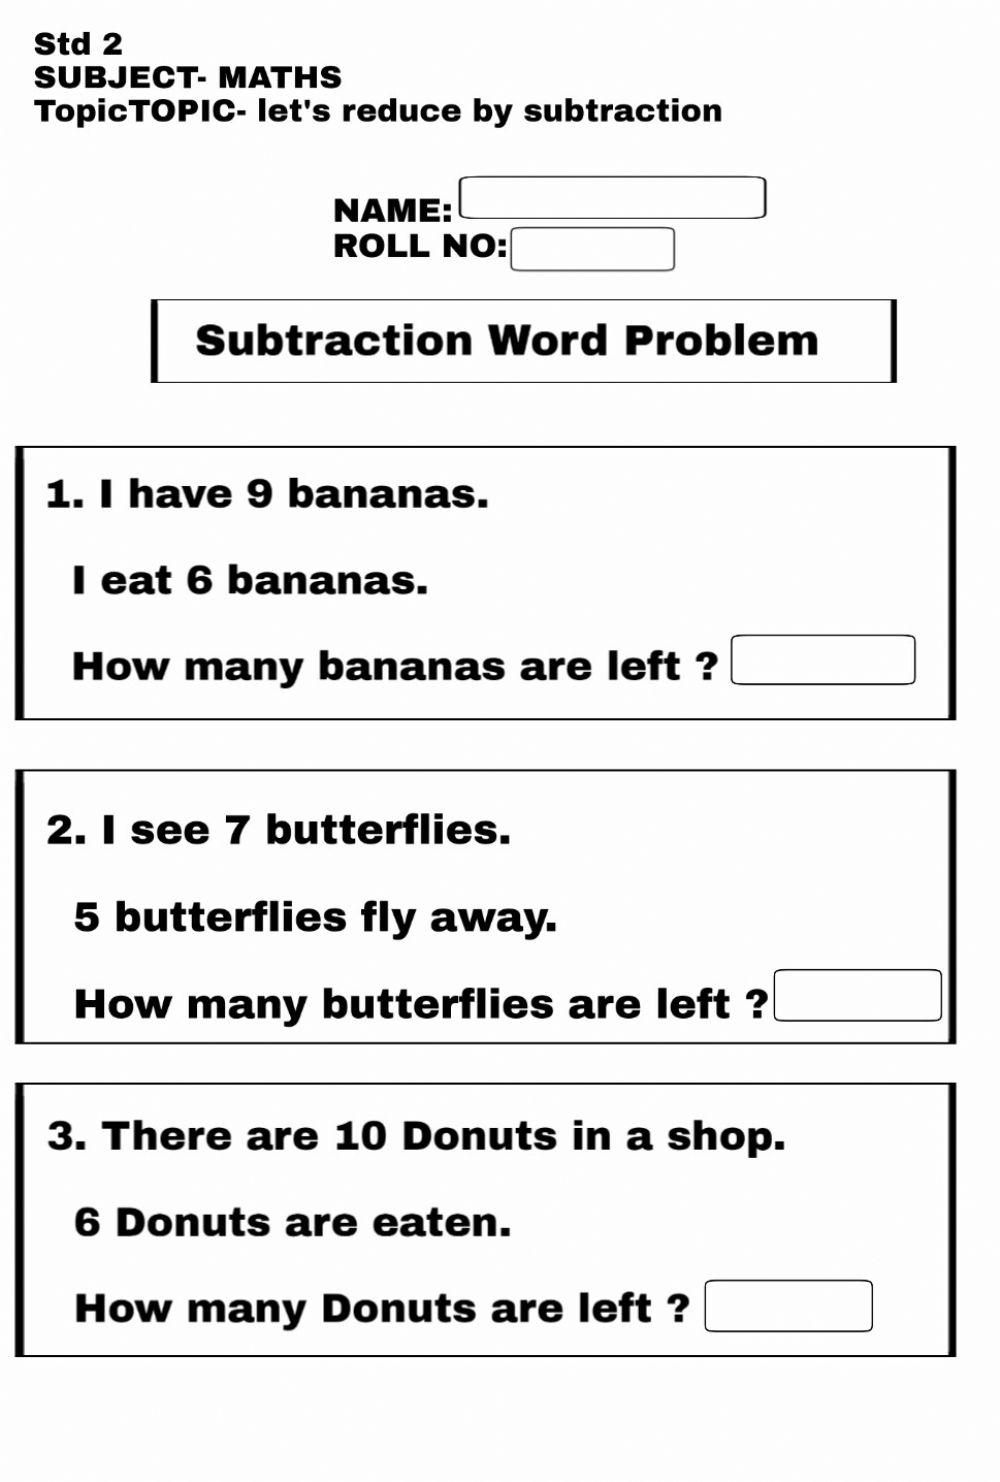 Subtraction word problem